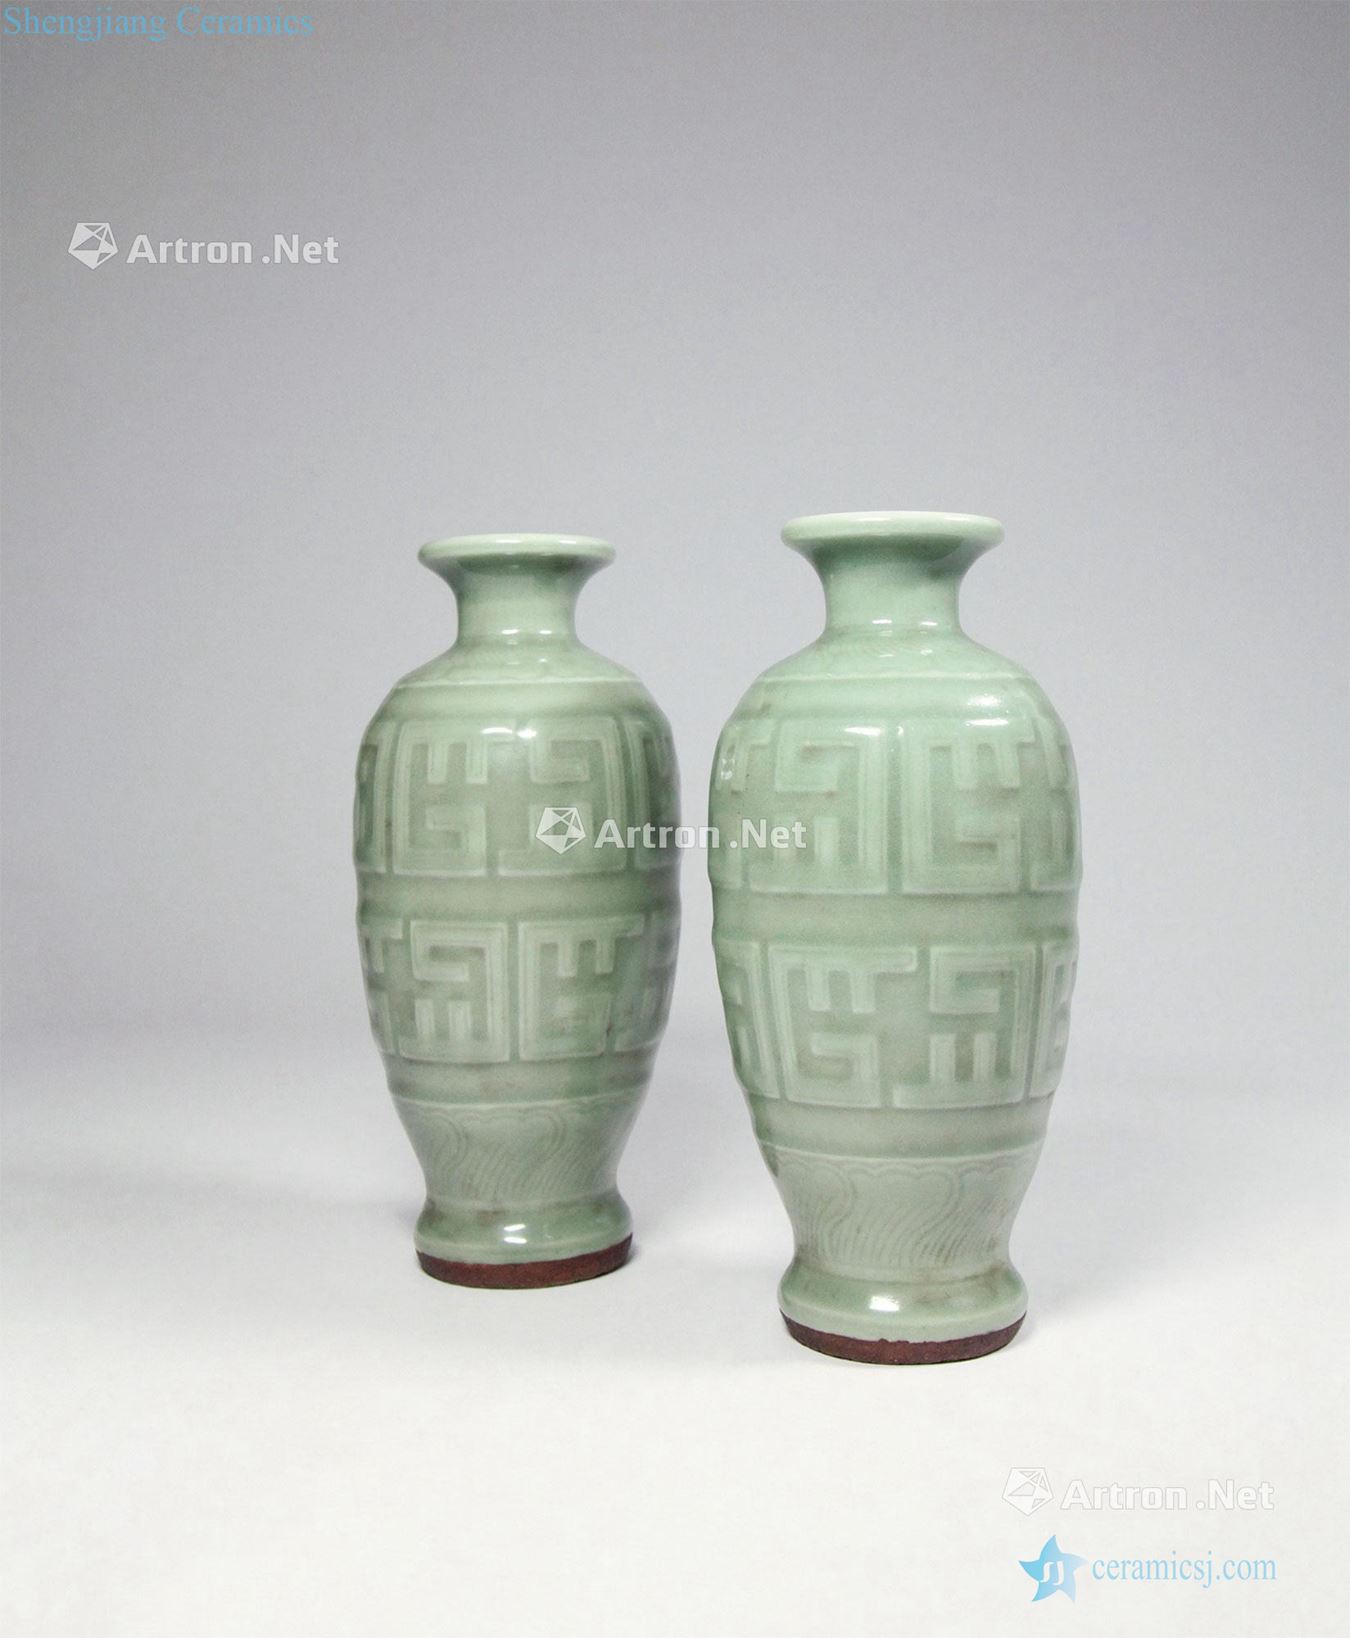 Ming dynasty celadon vase (a)